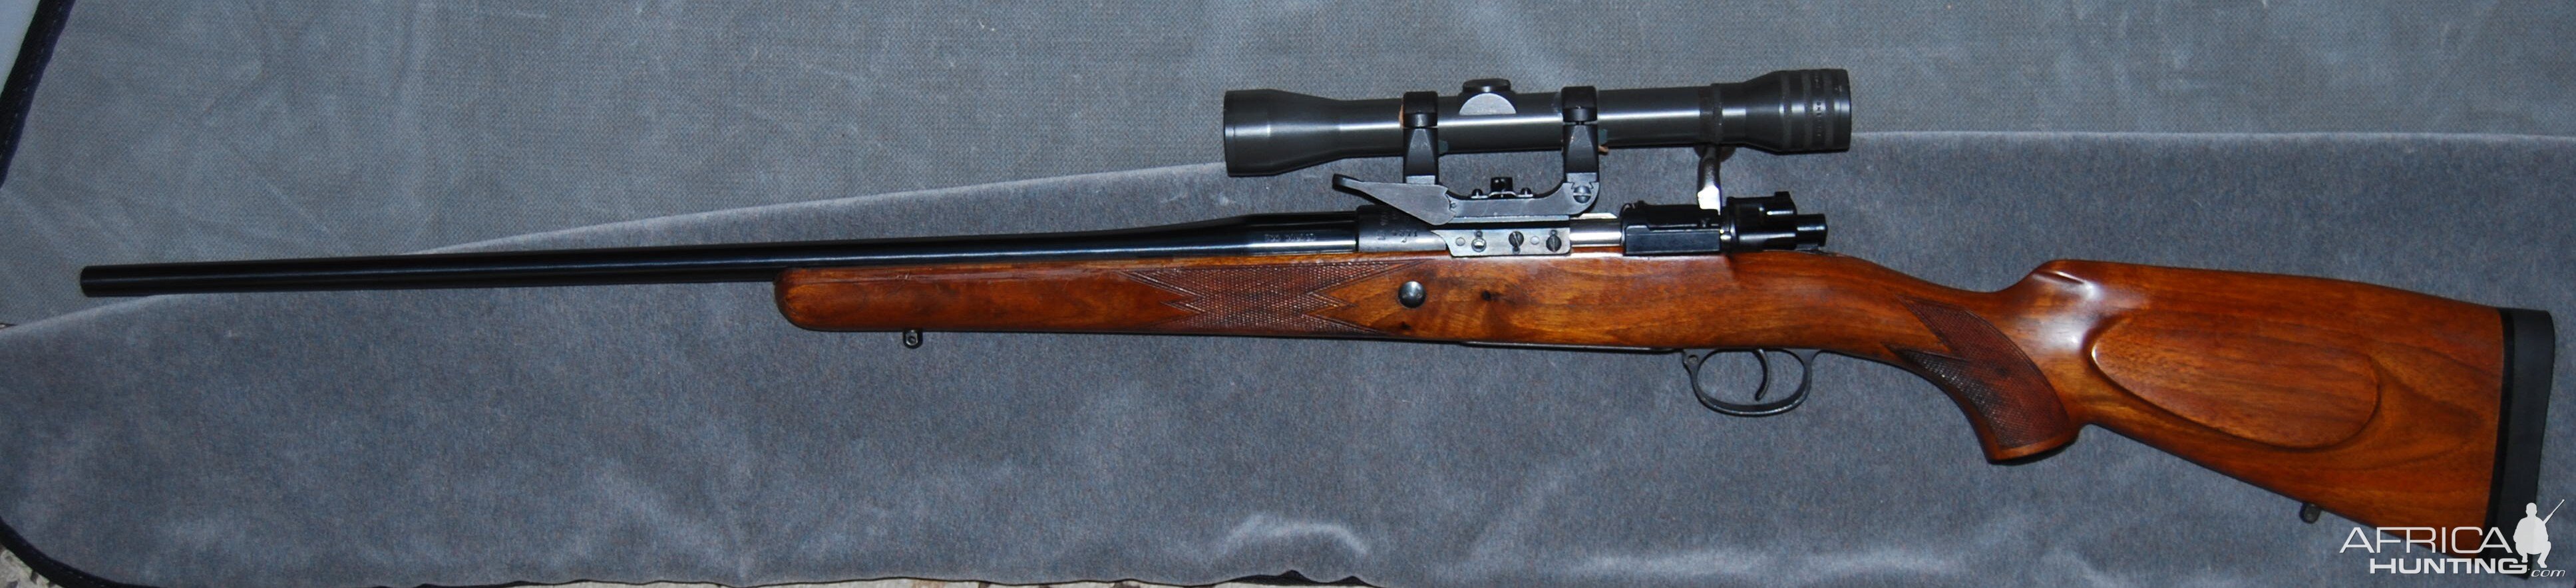 Oberndorf 98 Gew Rifle from 1916 rebarrelled with a Shilen 7x57mm